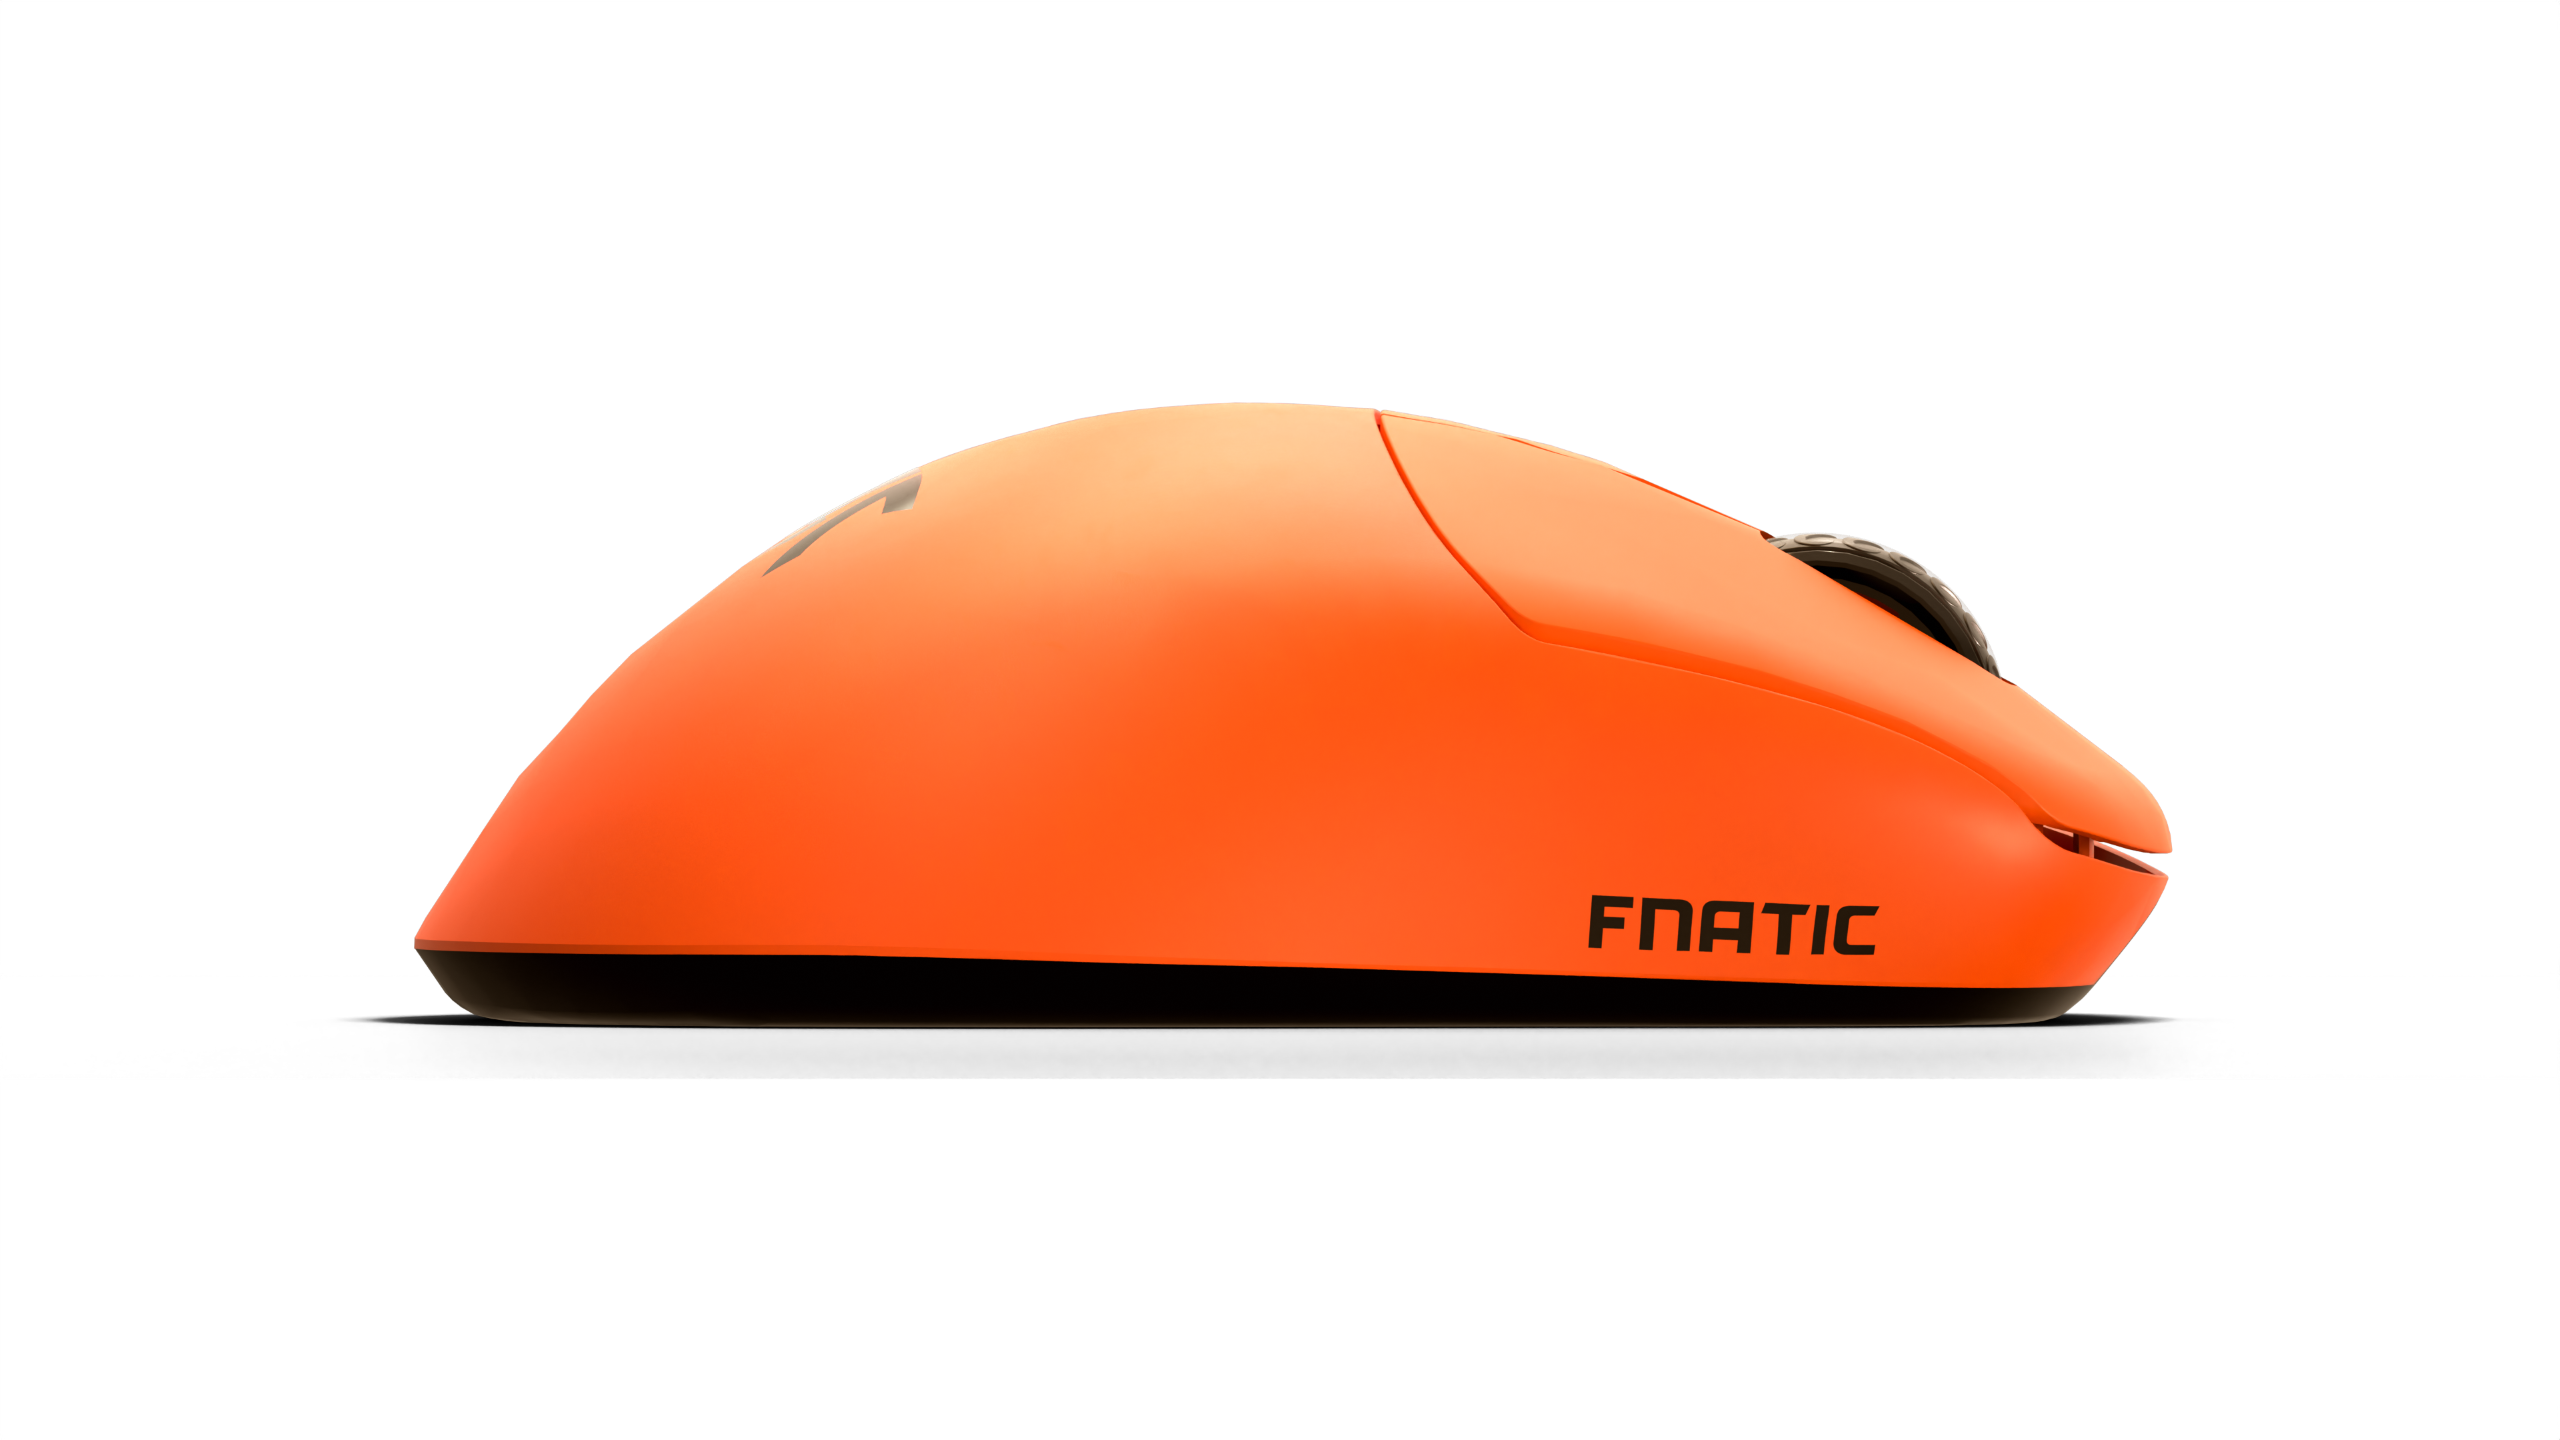 Fnatic x Thorn Lamzu Wireless Limited Edition 4K Wireless Mouse